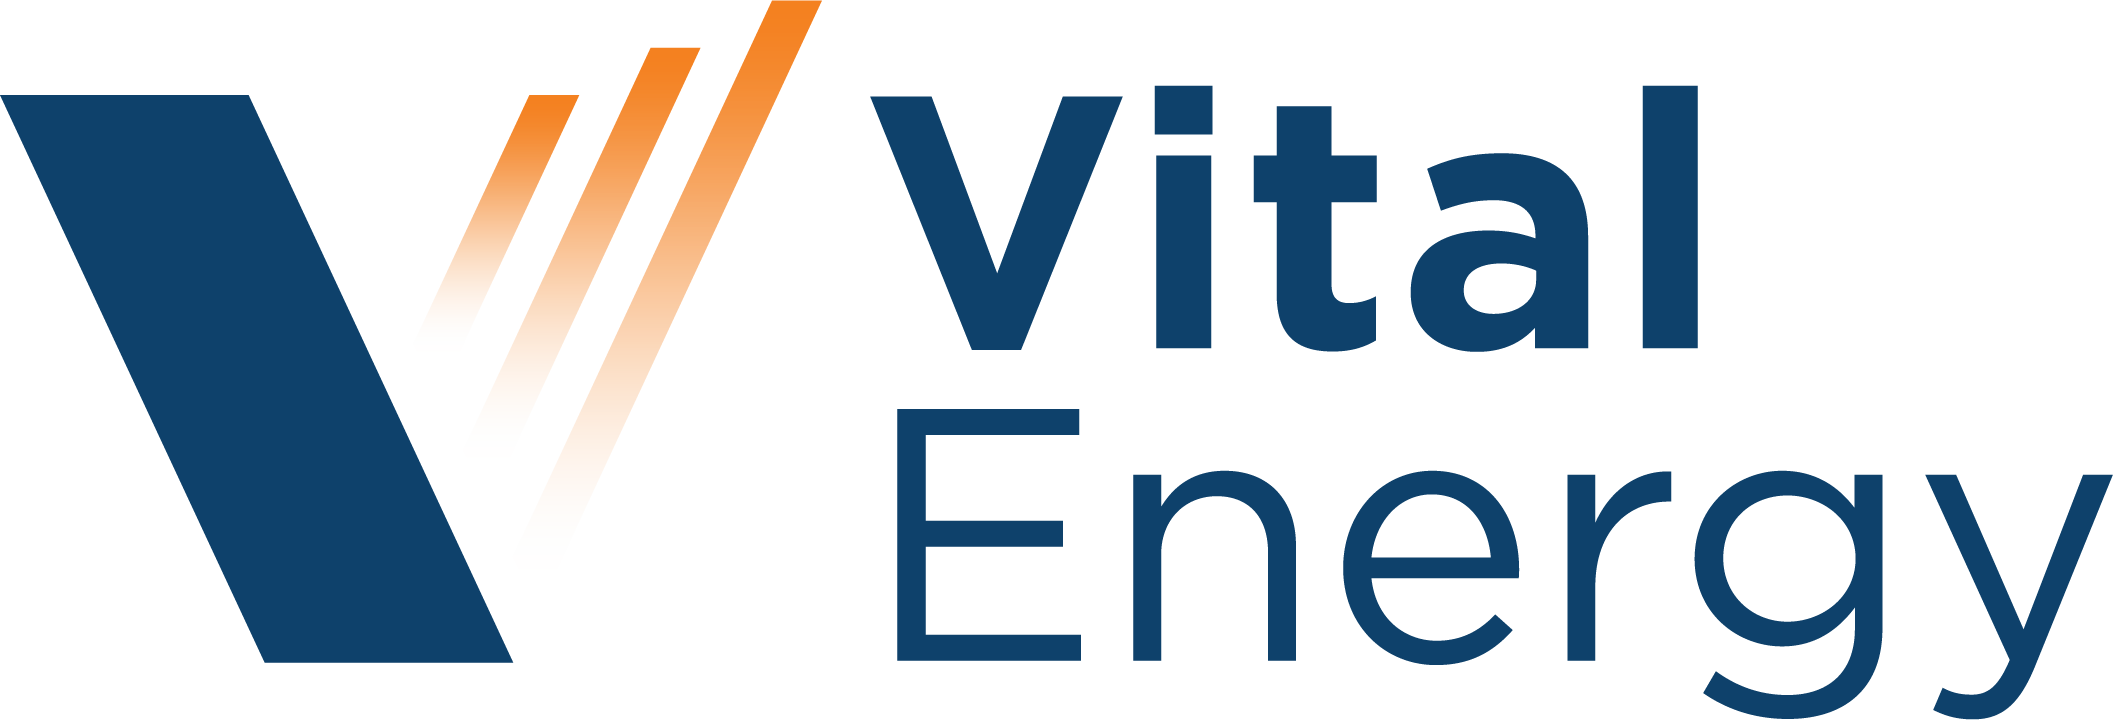 Vital Energy logo large (transparent PNG)